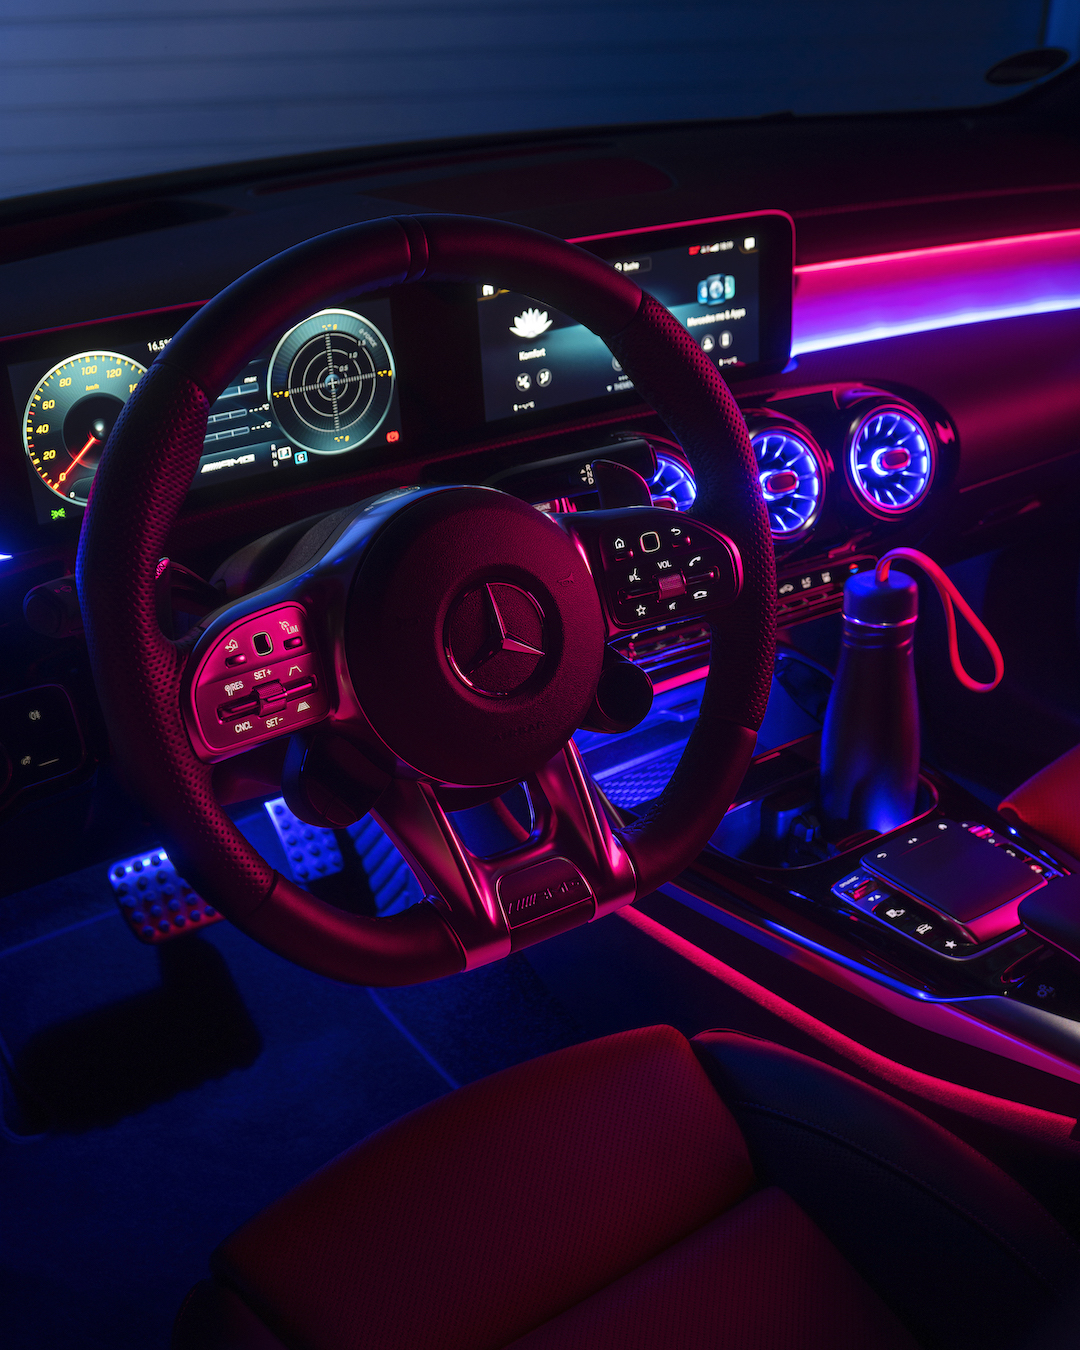 Mercedes-Benz on Twitter: "The pink ambient lighting orchestrates the interior like work art. Enjoy! #MercedesBenz #ambientlight https://t.co/nBd1s2SqKZ" Twitter